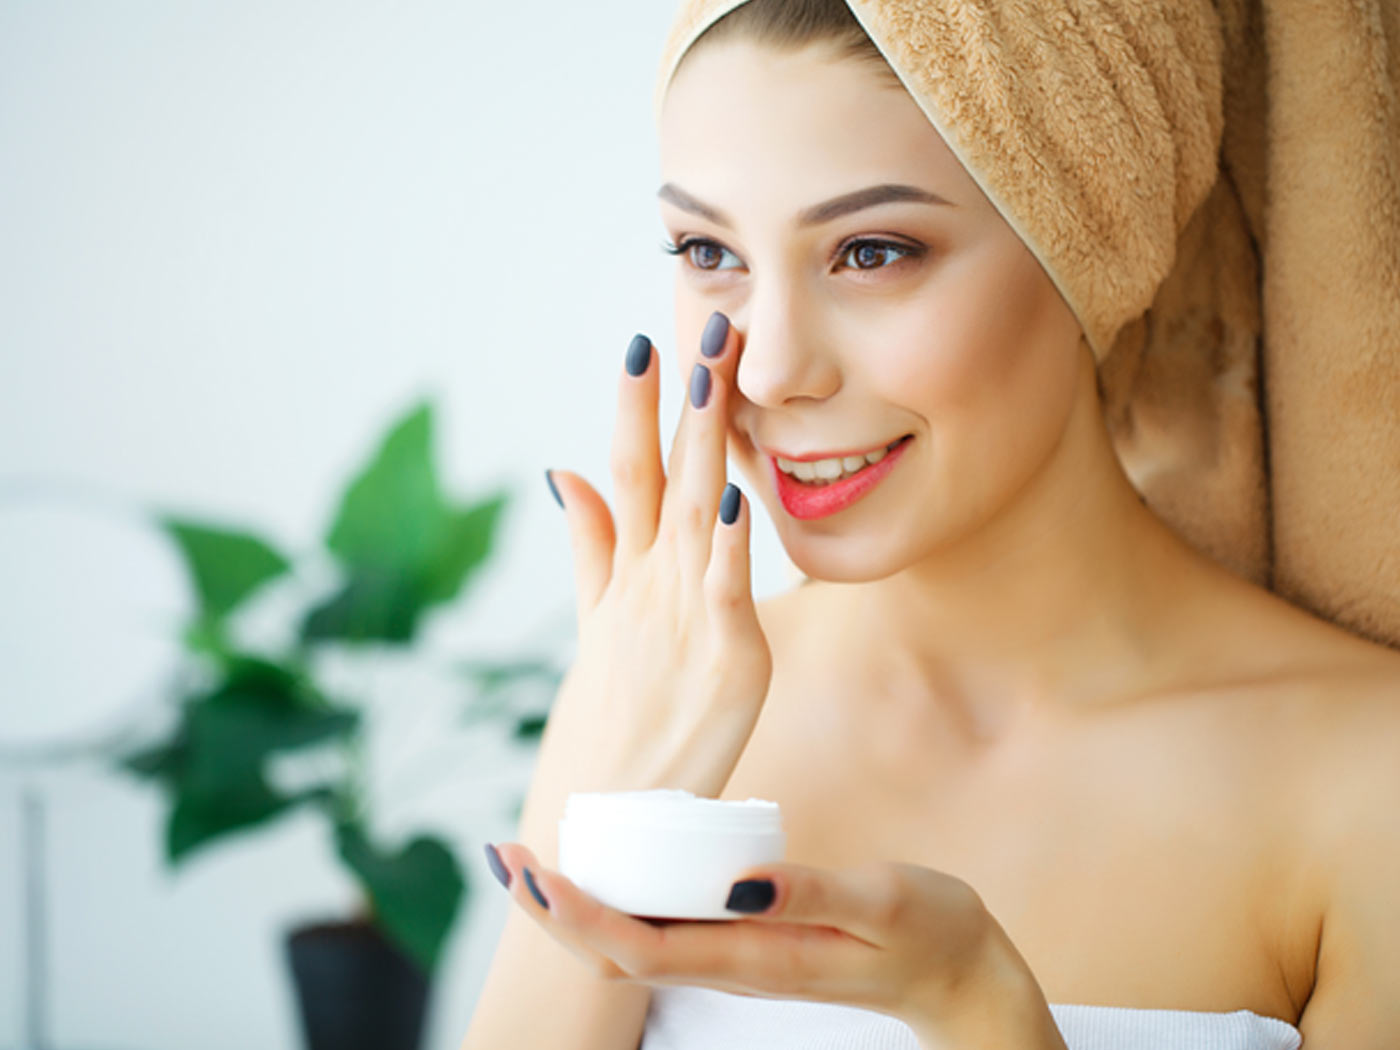 Is Applying Moisturiser On Your Face Good or Bad?